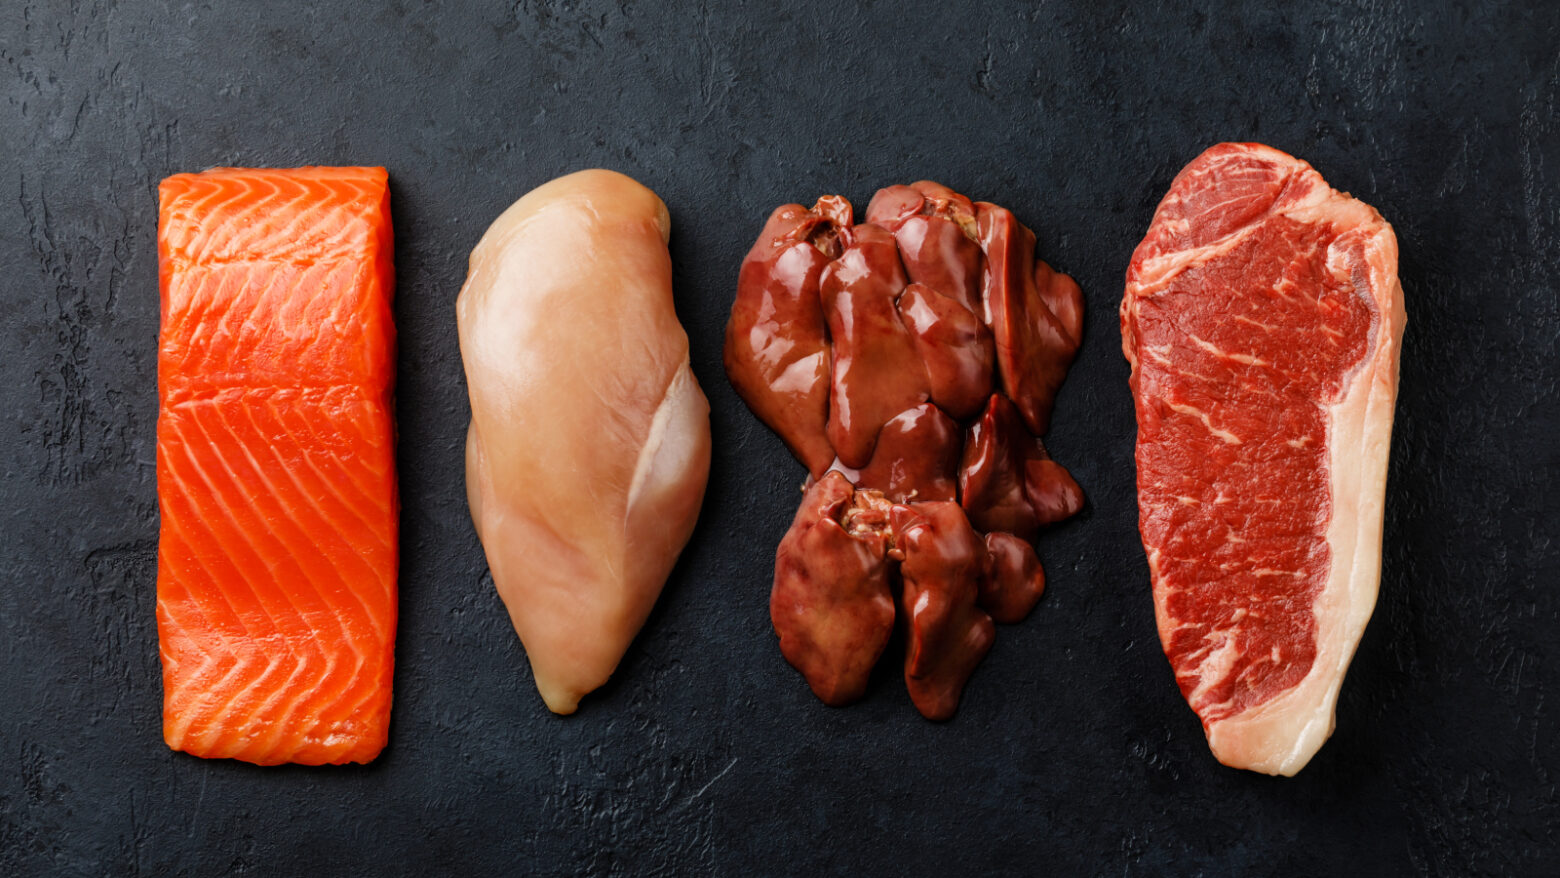 Raw cuts of salmon, chicken, steak, and organ meat on black slate